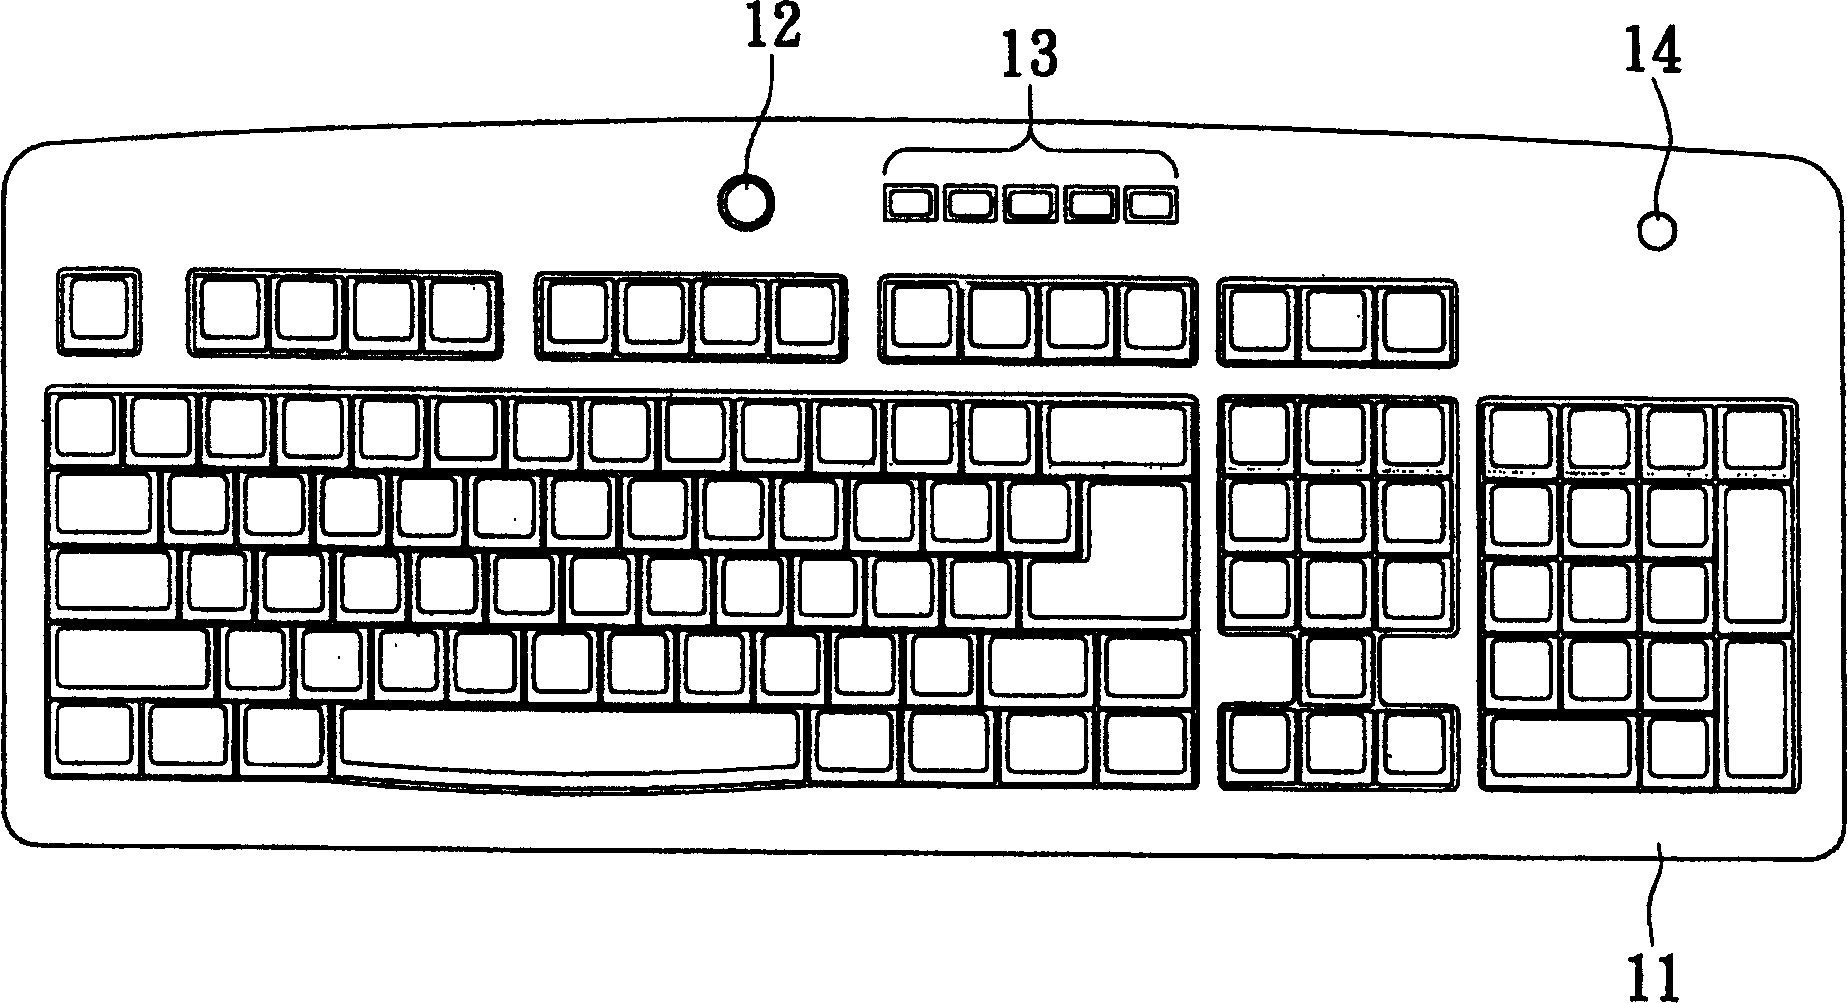 Keyboard having extended keys and method for setting code of extended key